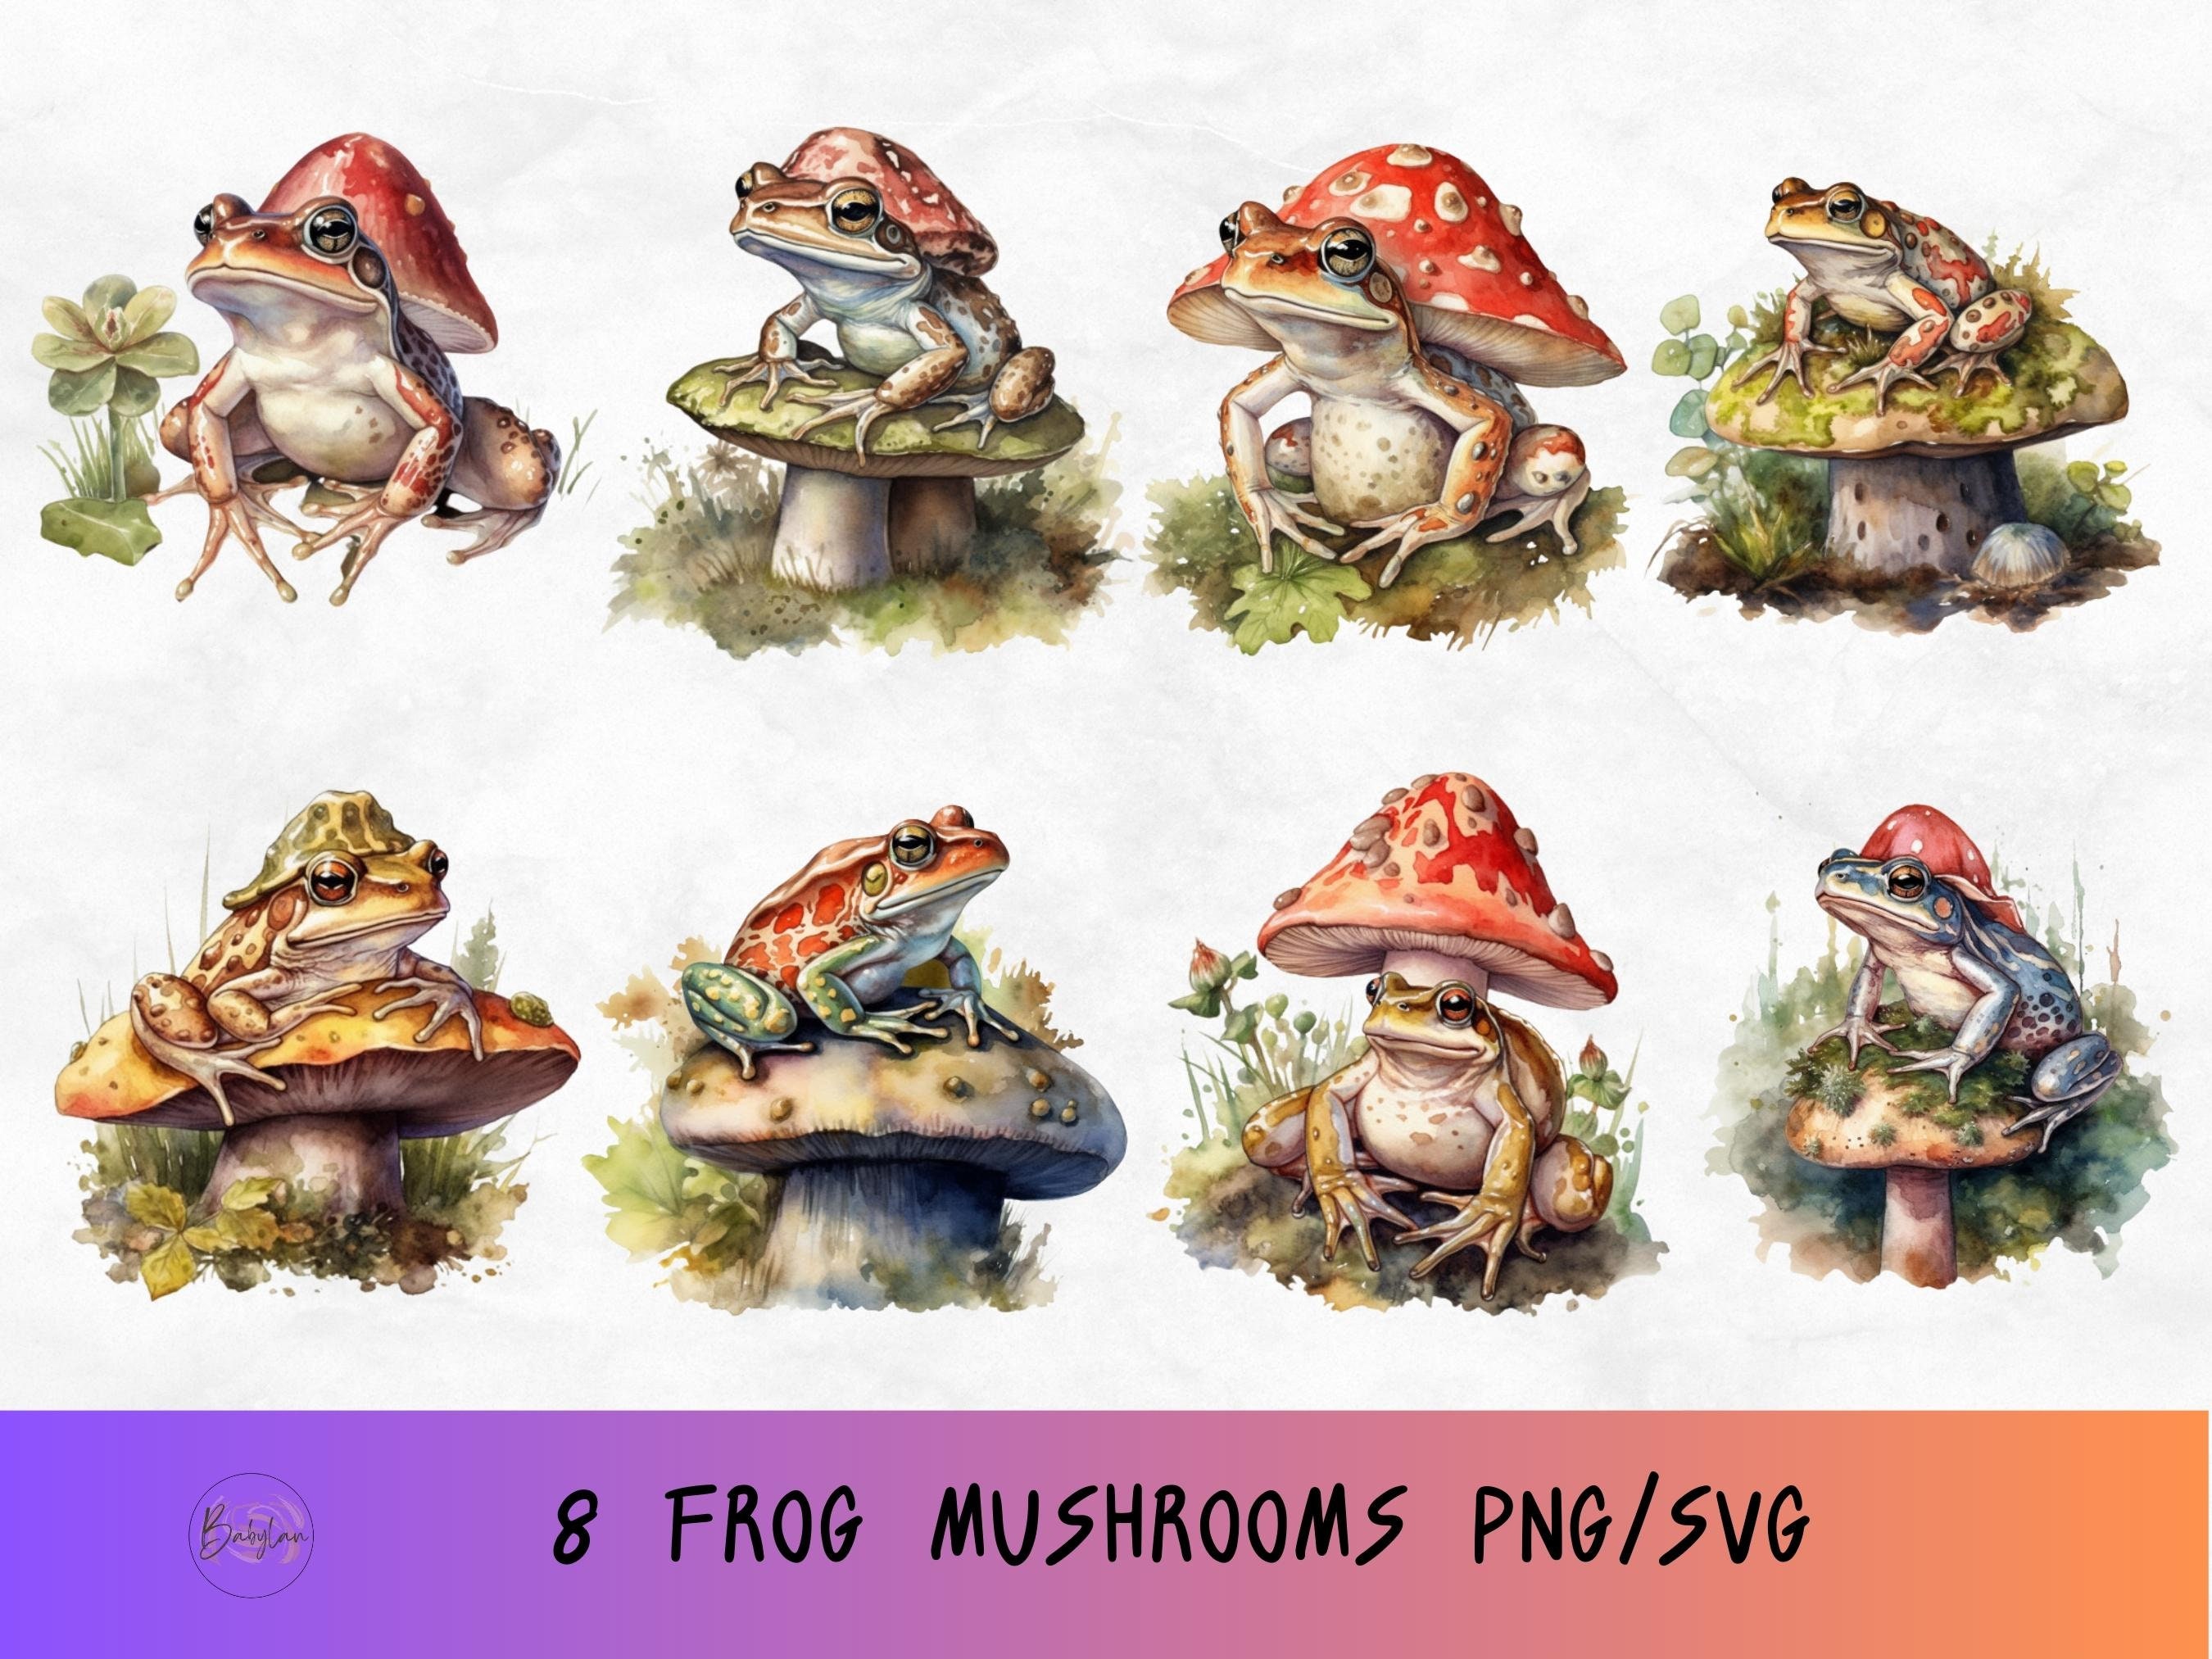 Watercolor Vintage Cute Floral Frog on a Mushroom PNG Clipa